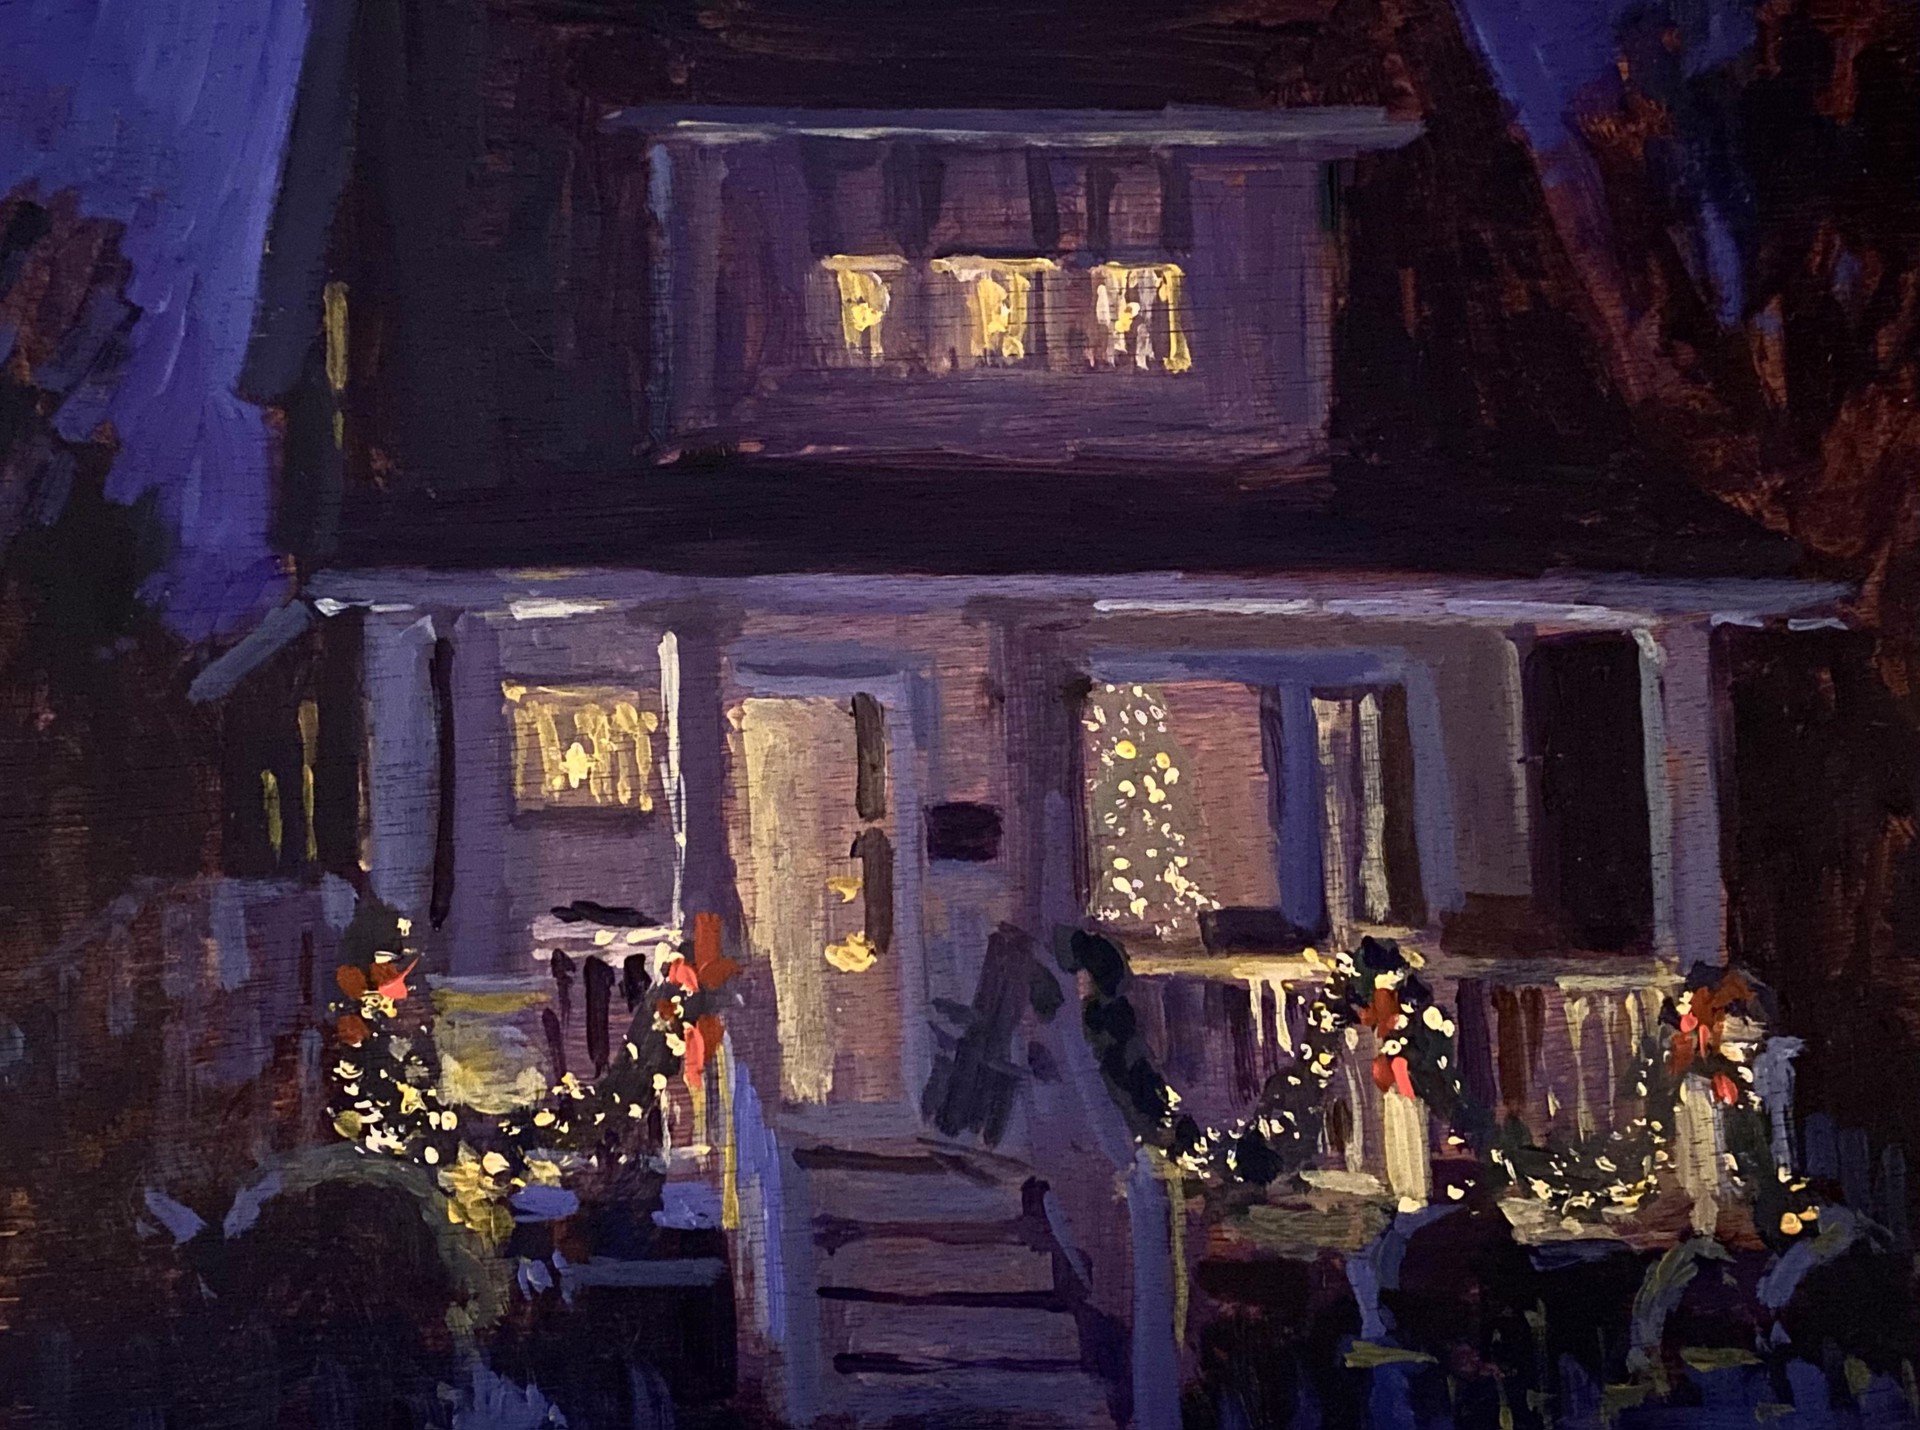 "Holiday Lights" original oil painting by Joe Gyurcsak